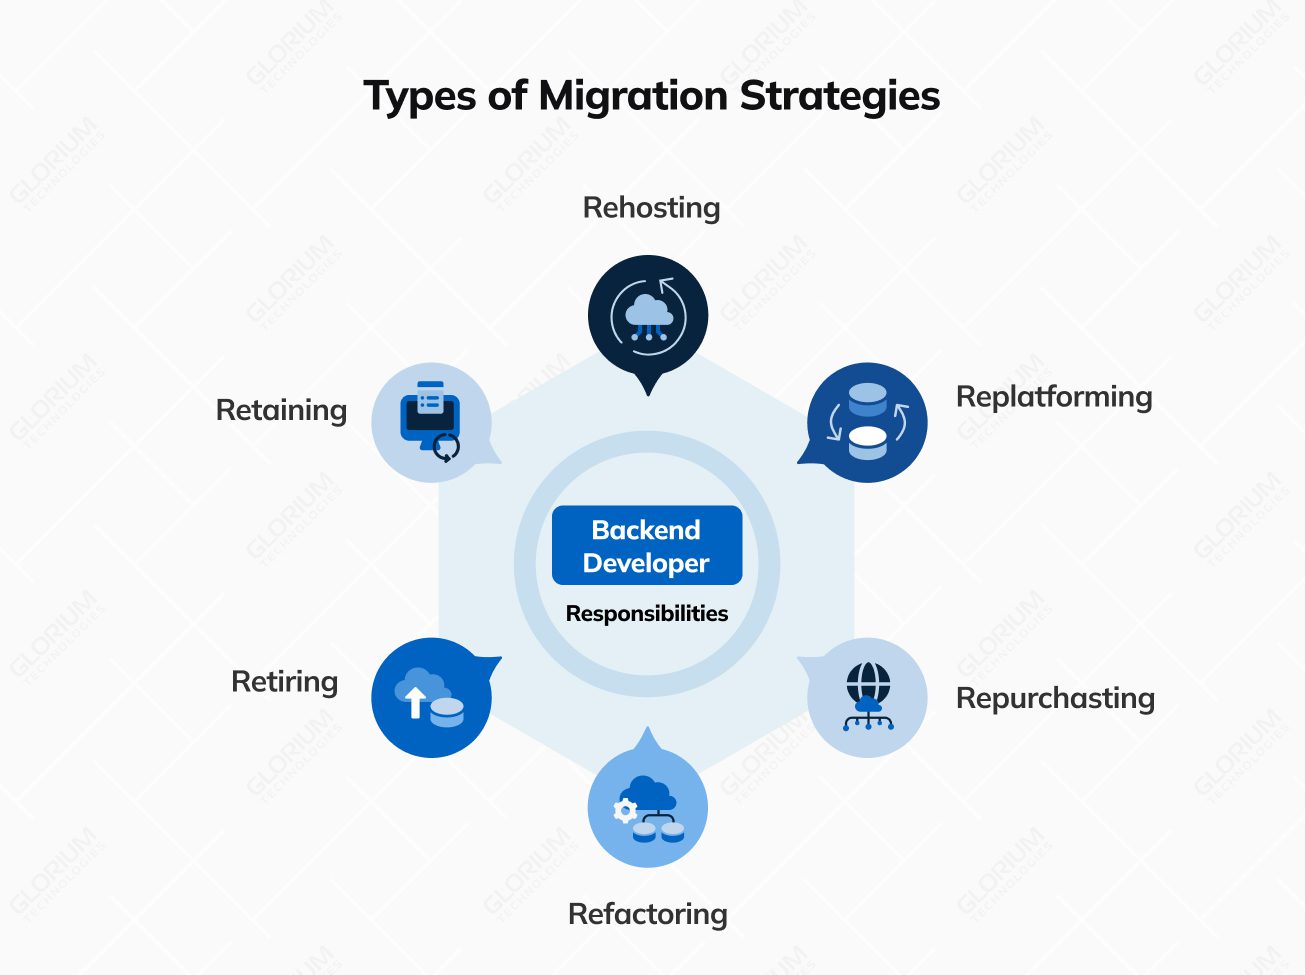 Types of Migration Strategies